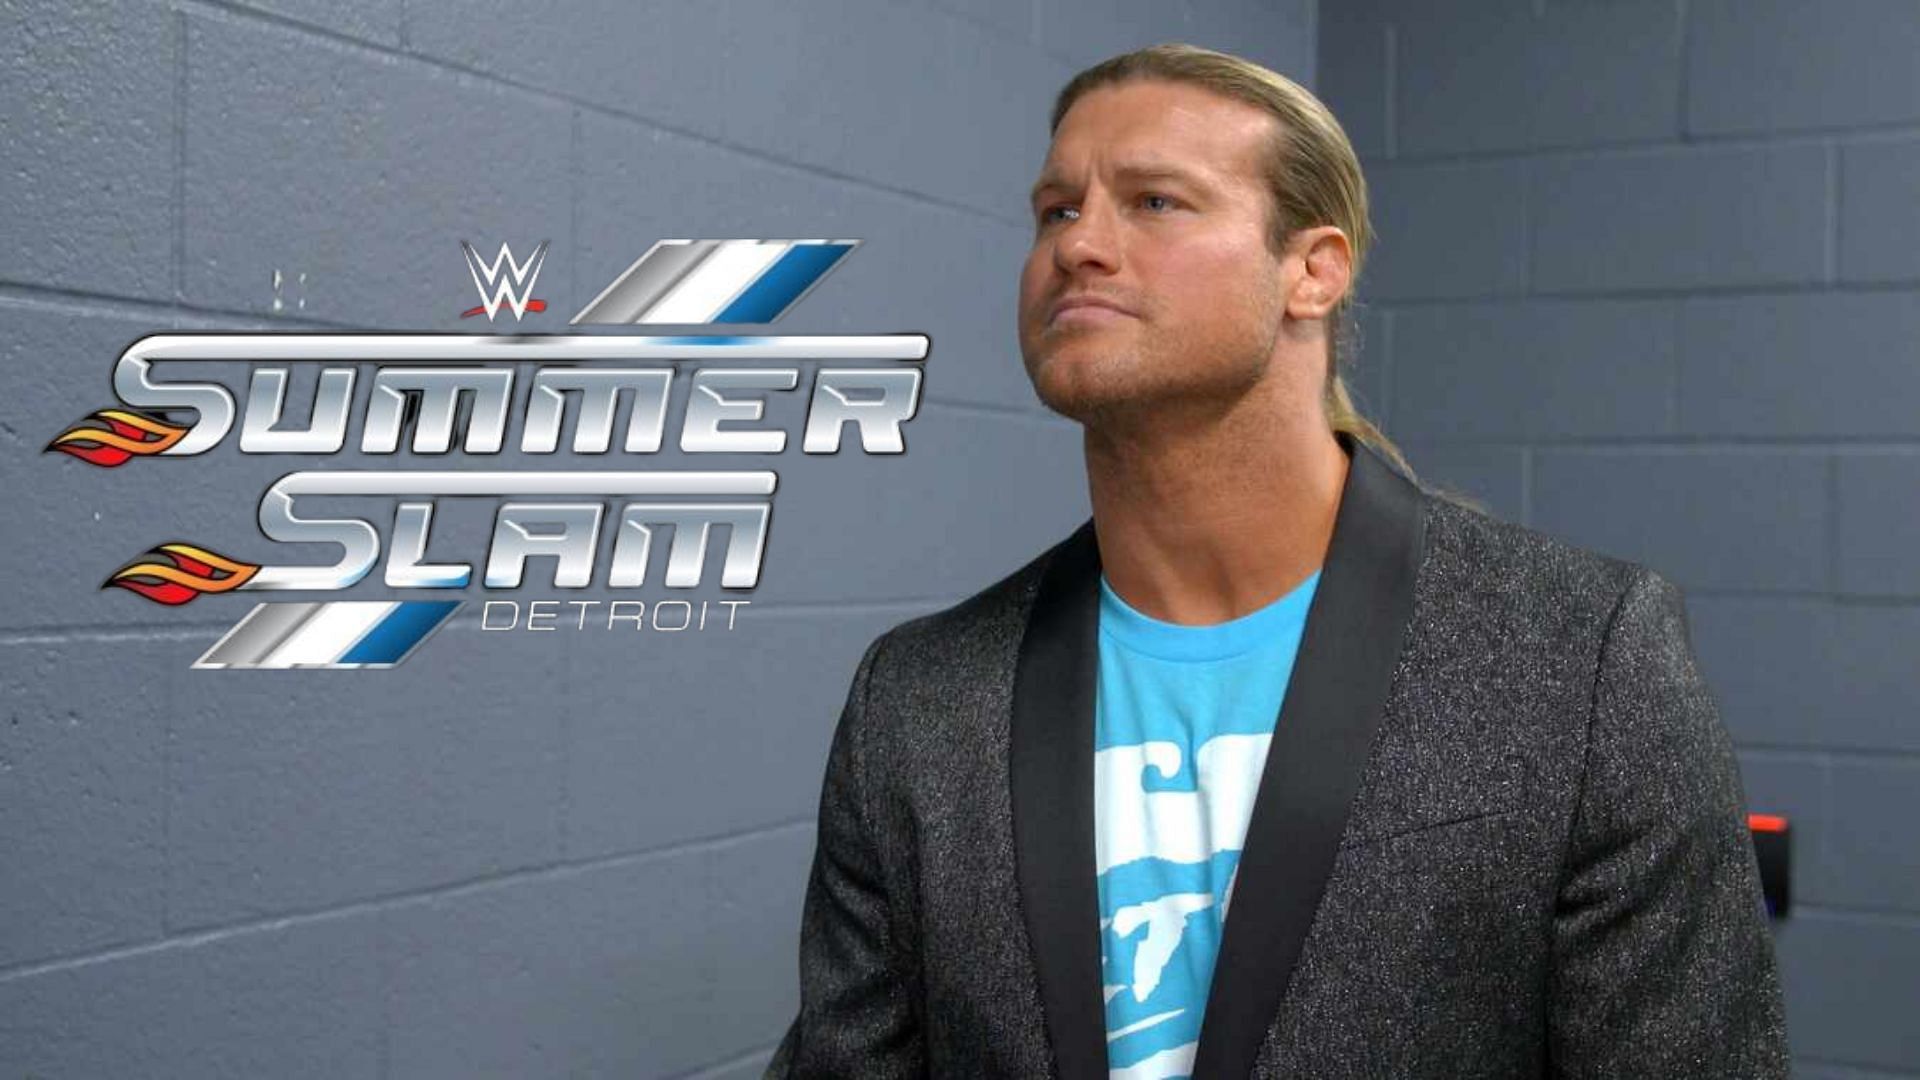 Dolph Ziggler can make an impact at WWE SummerSlam